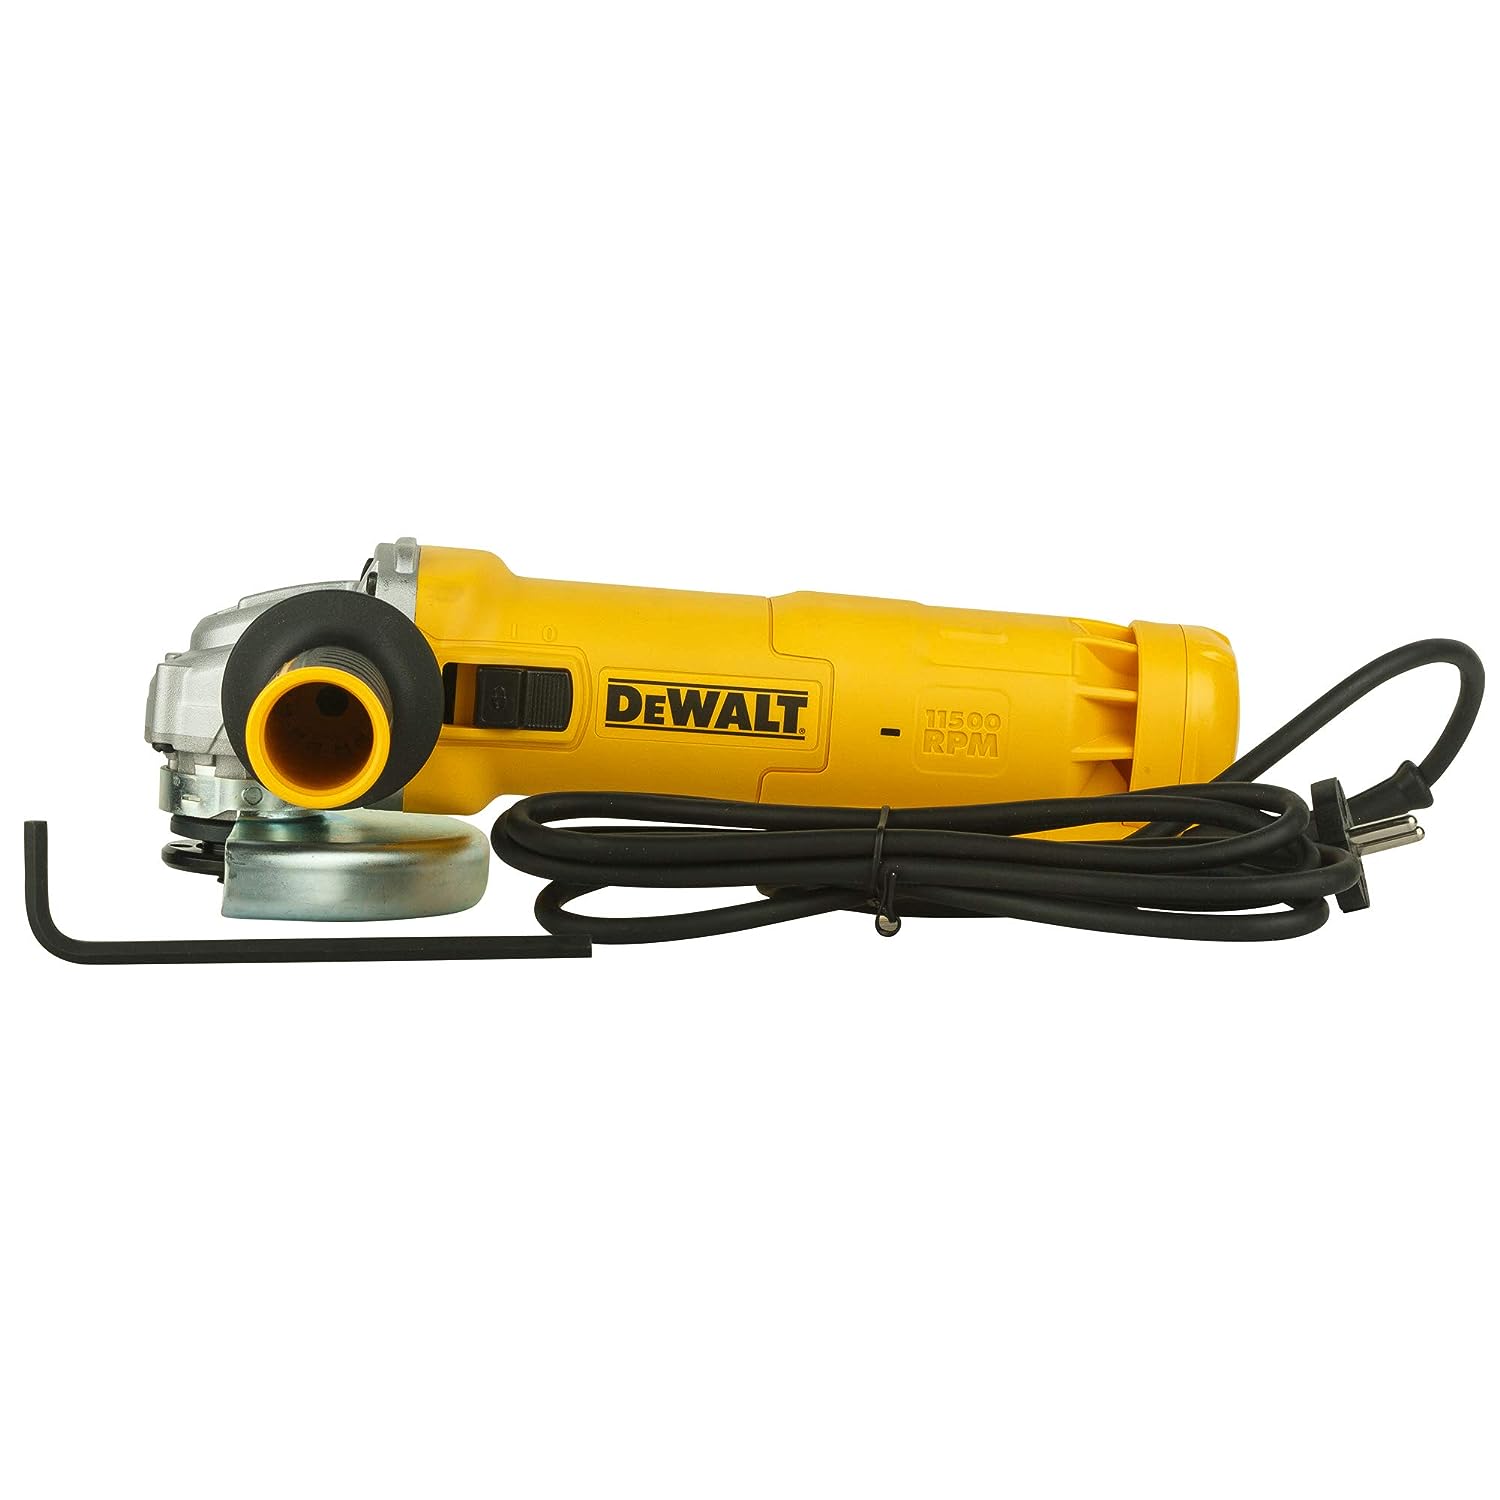 DEWALT DWE4235 125 mm Angle Grinders 1400 W 11500 rpm_0